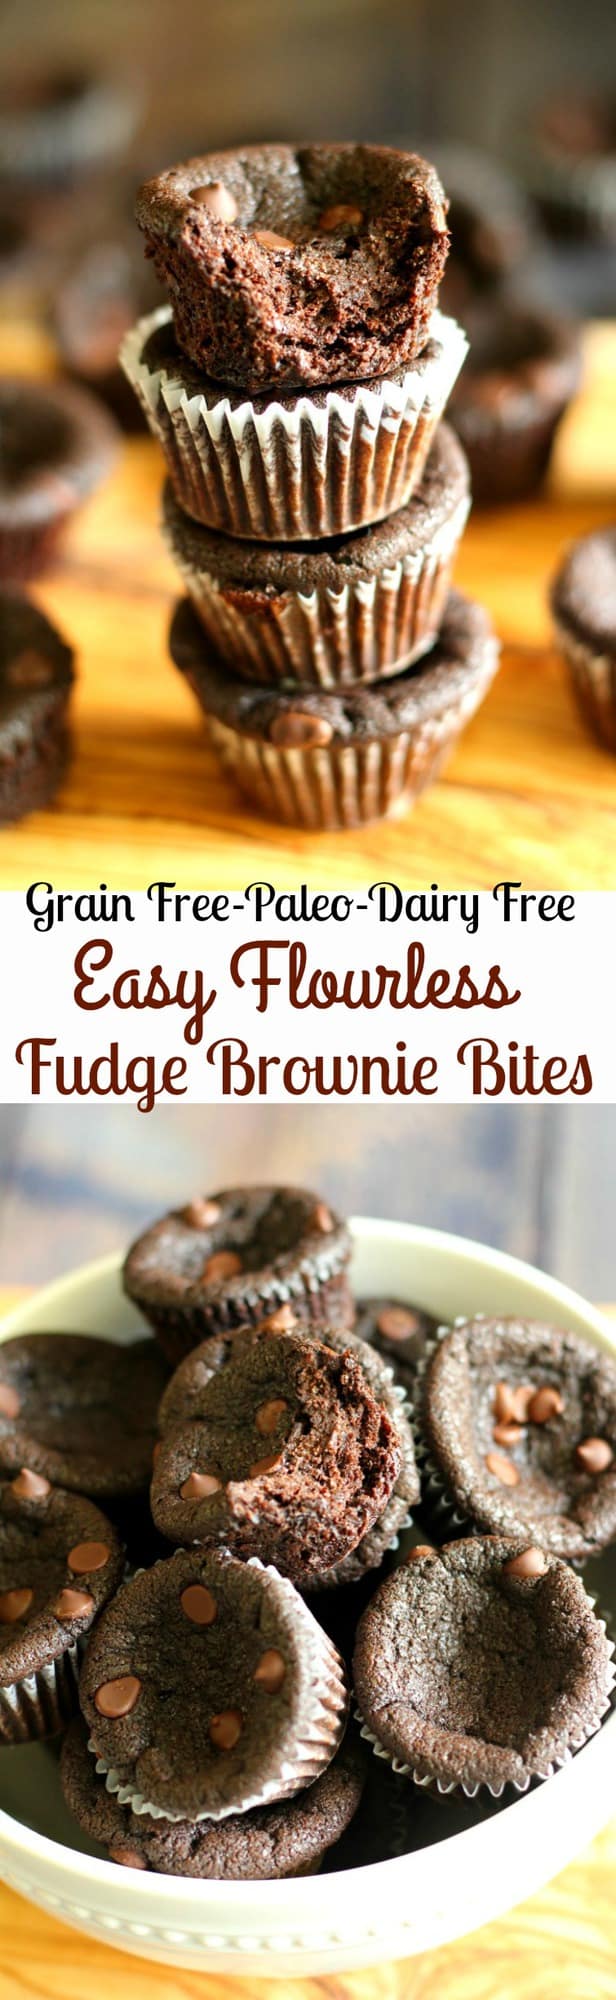 easy flourless fudge brownie bites - grain free, paleo, dairy free